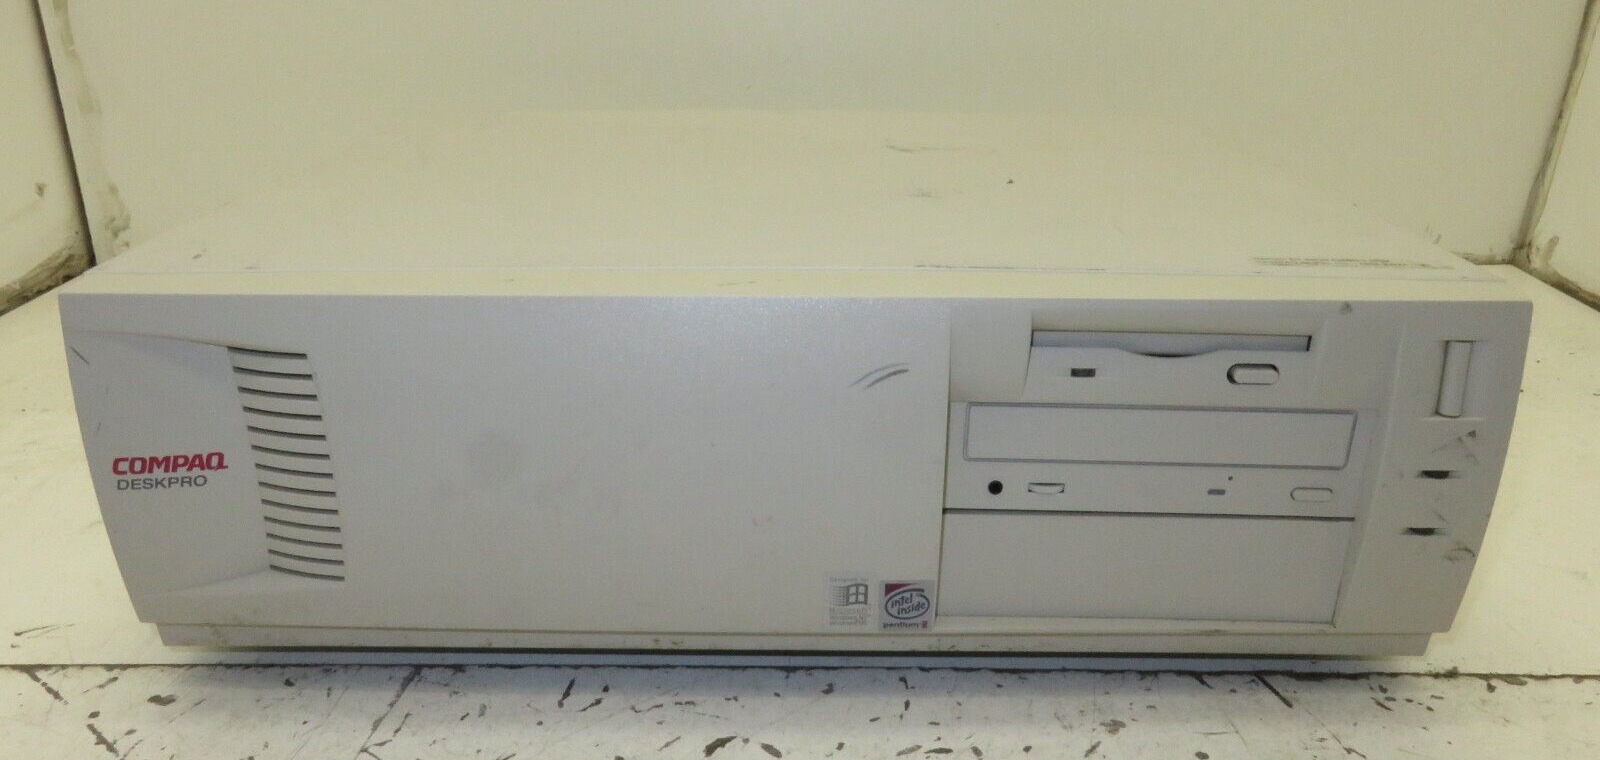 Compaq Deskpro EN SFF Intel Pentium 2 PII 266MHz 64MB Ram No HDD